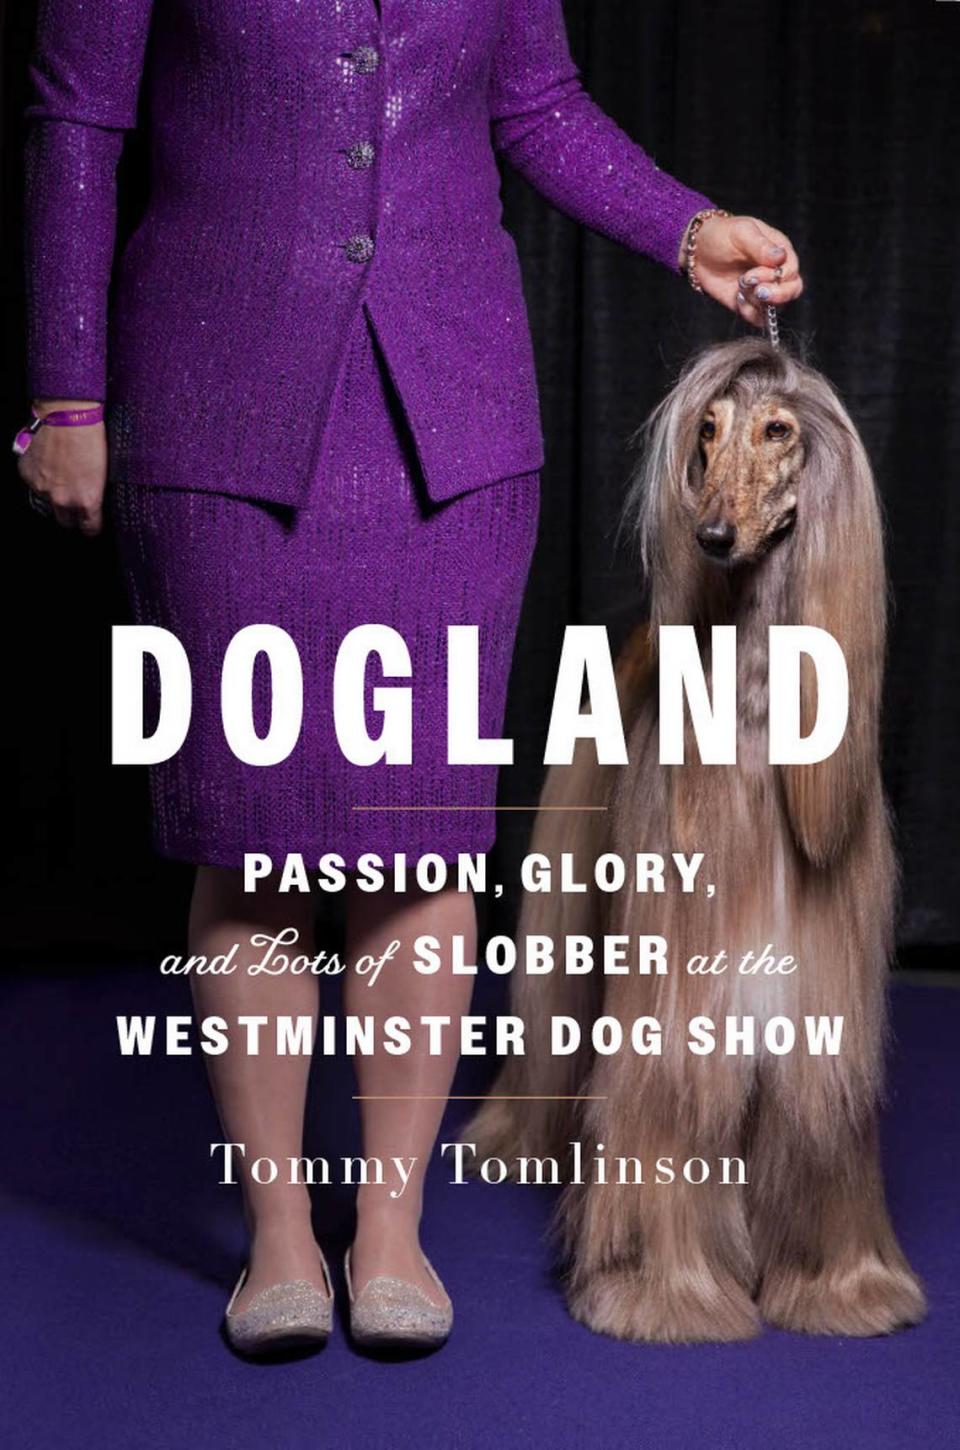 “Dogland” is former Charlotte Observer columnist Tommy Tomlinson’s inside account of the Westminster Dog Show.